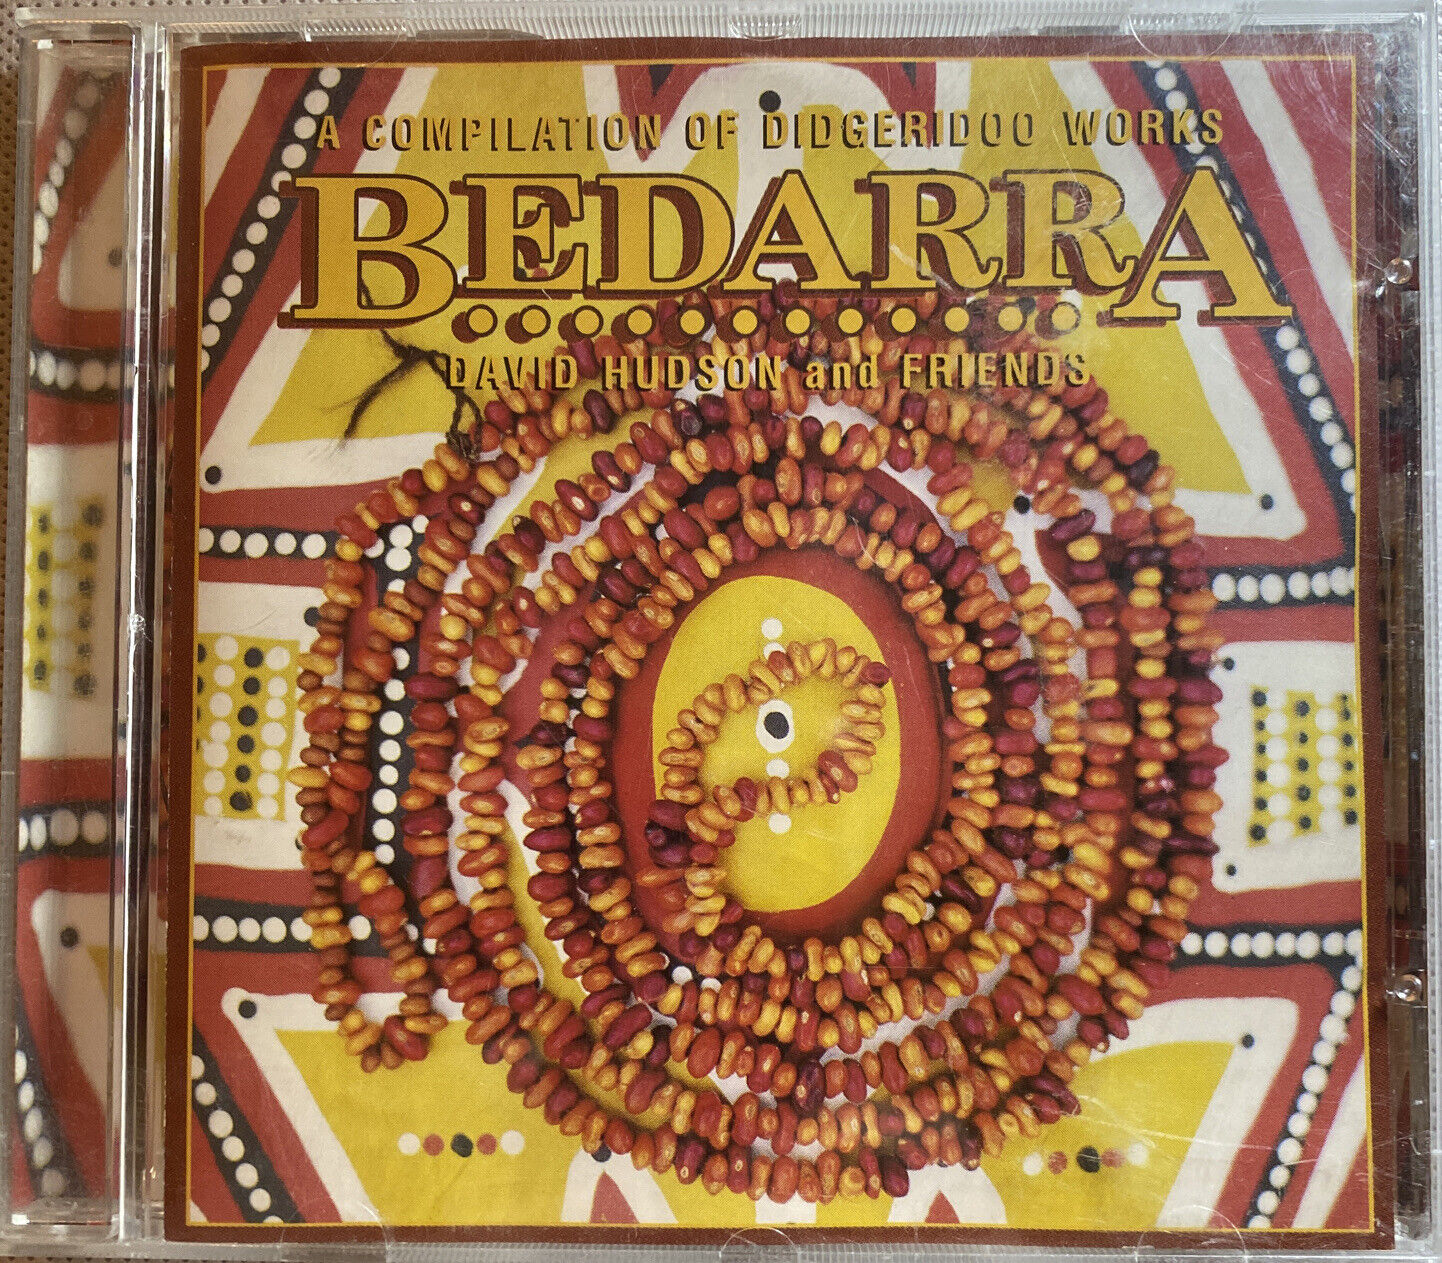 Bedarra - David Hudson and friends￼ A Compilation Of Didgeridoo Works CD,